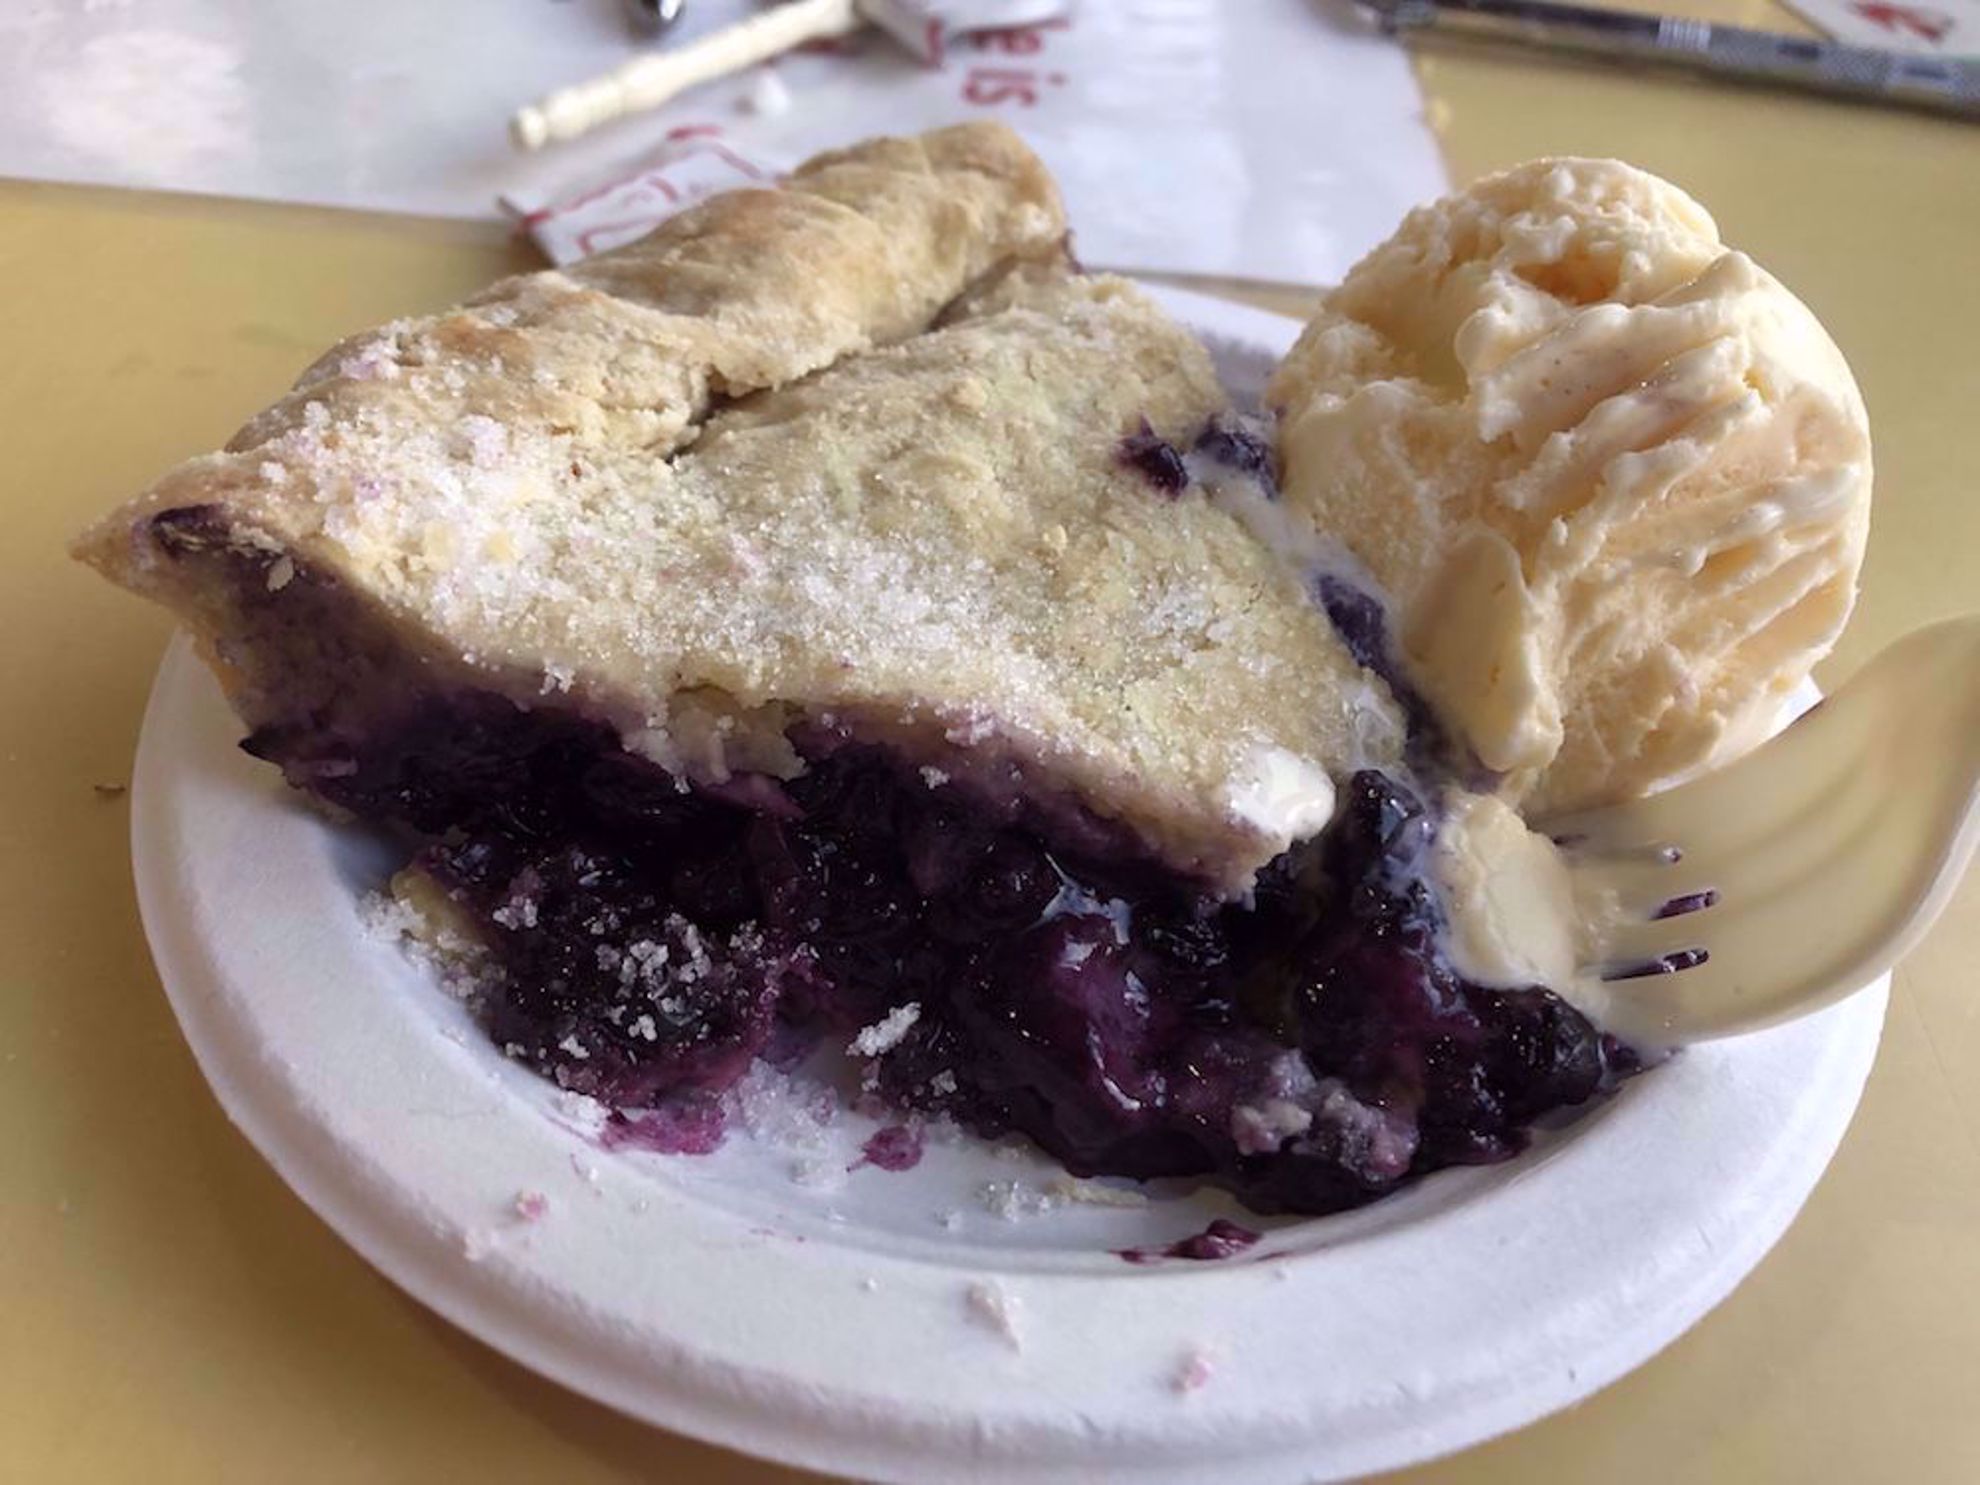 Maine Blueberry pie